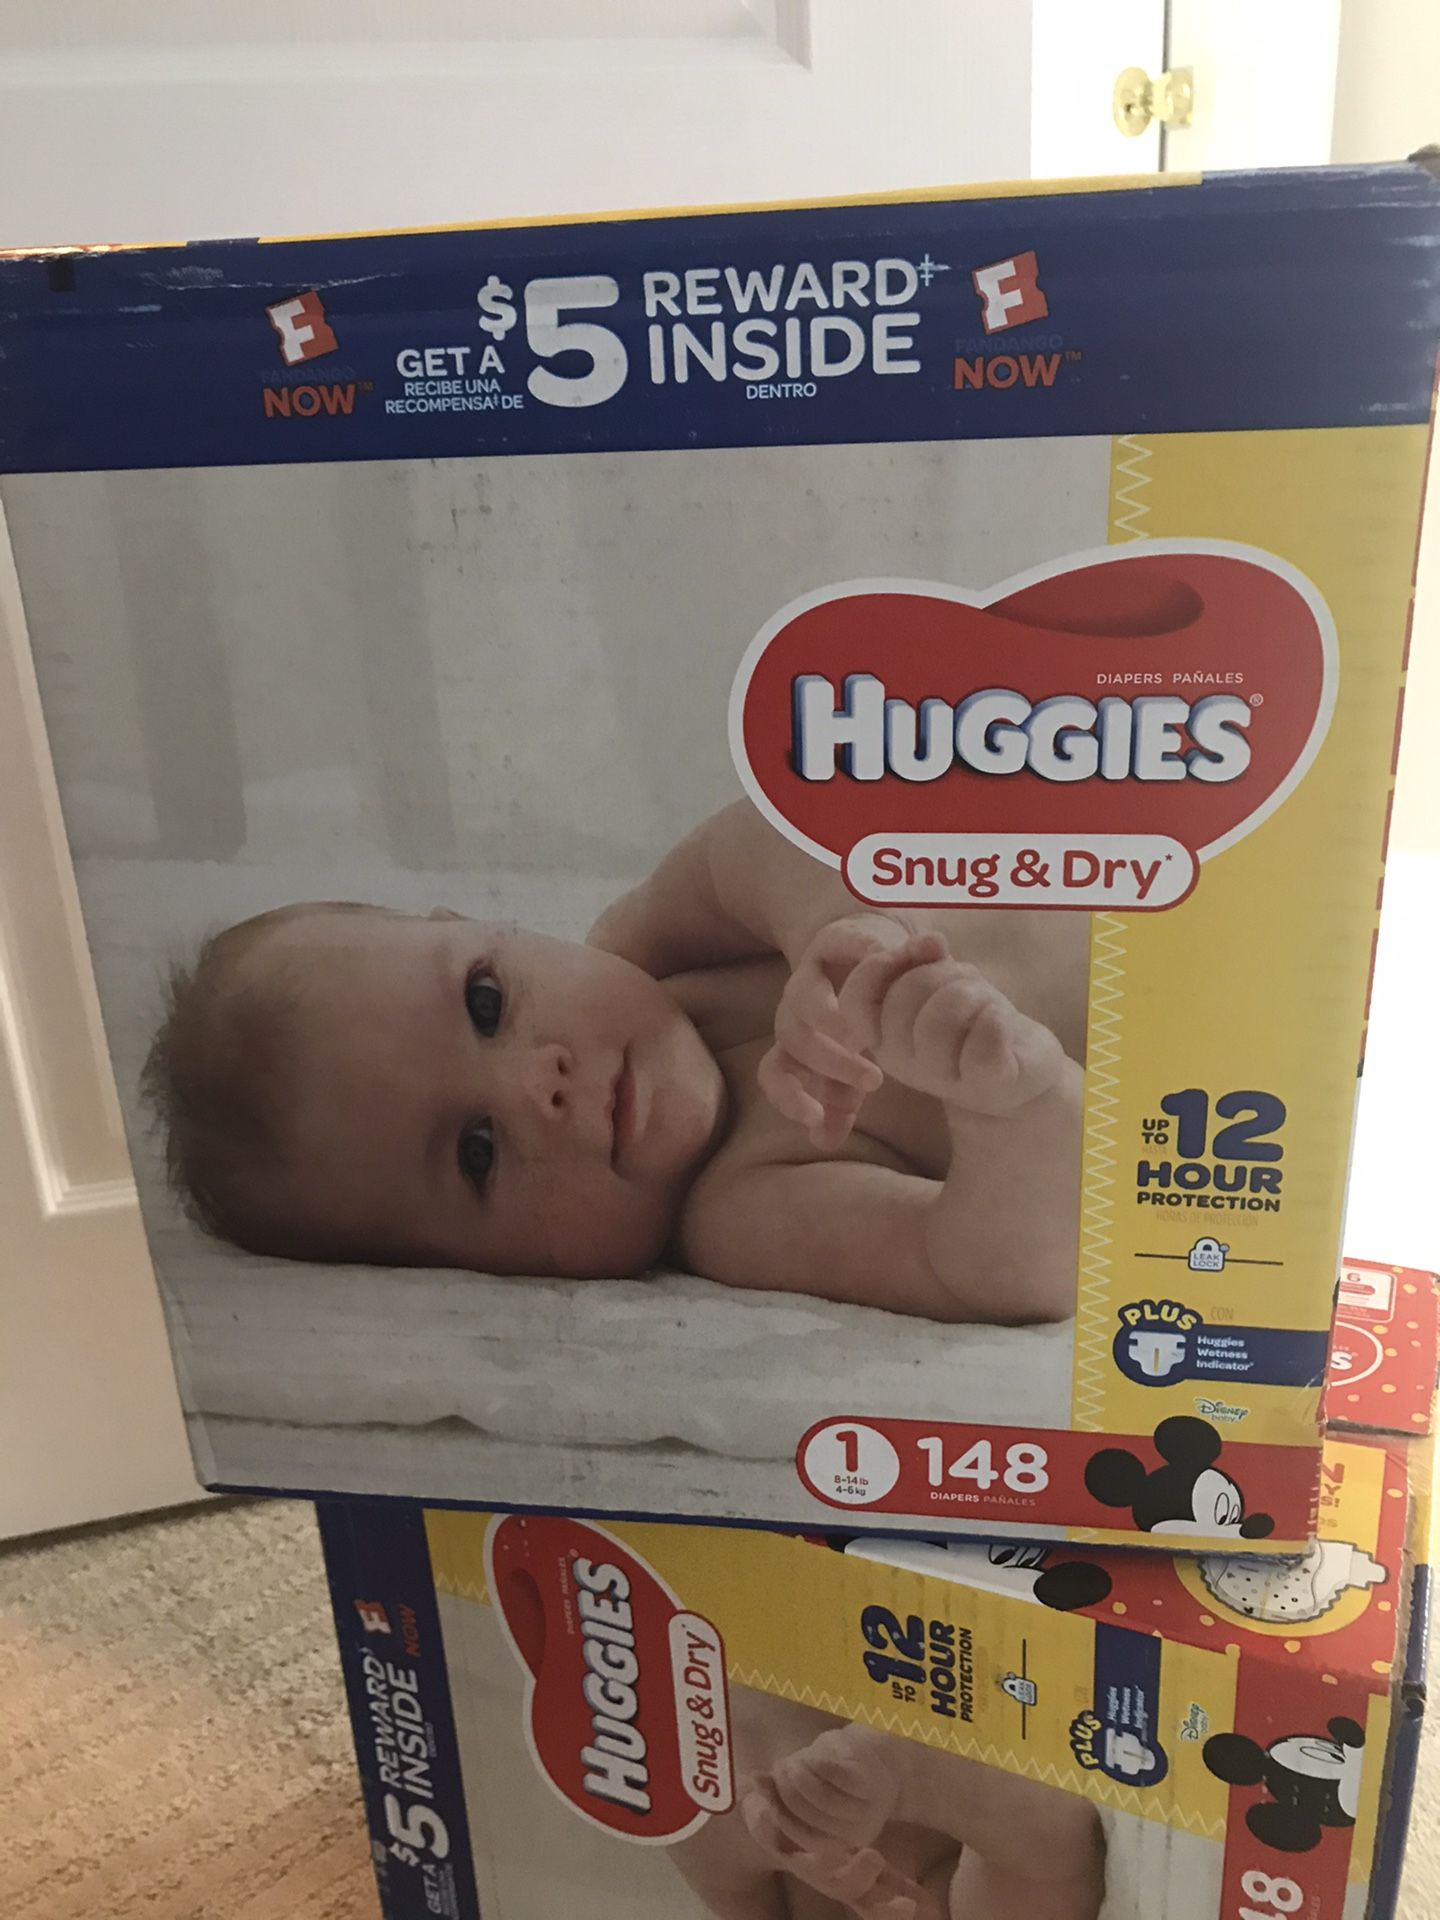 Huggies Snug & Dry Diapers Size 1